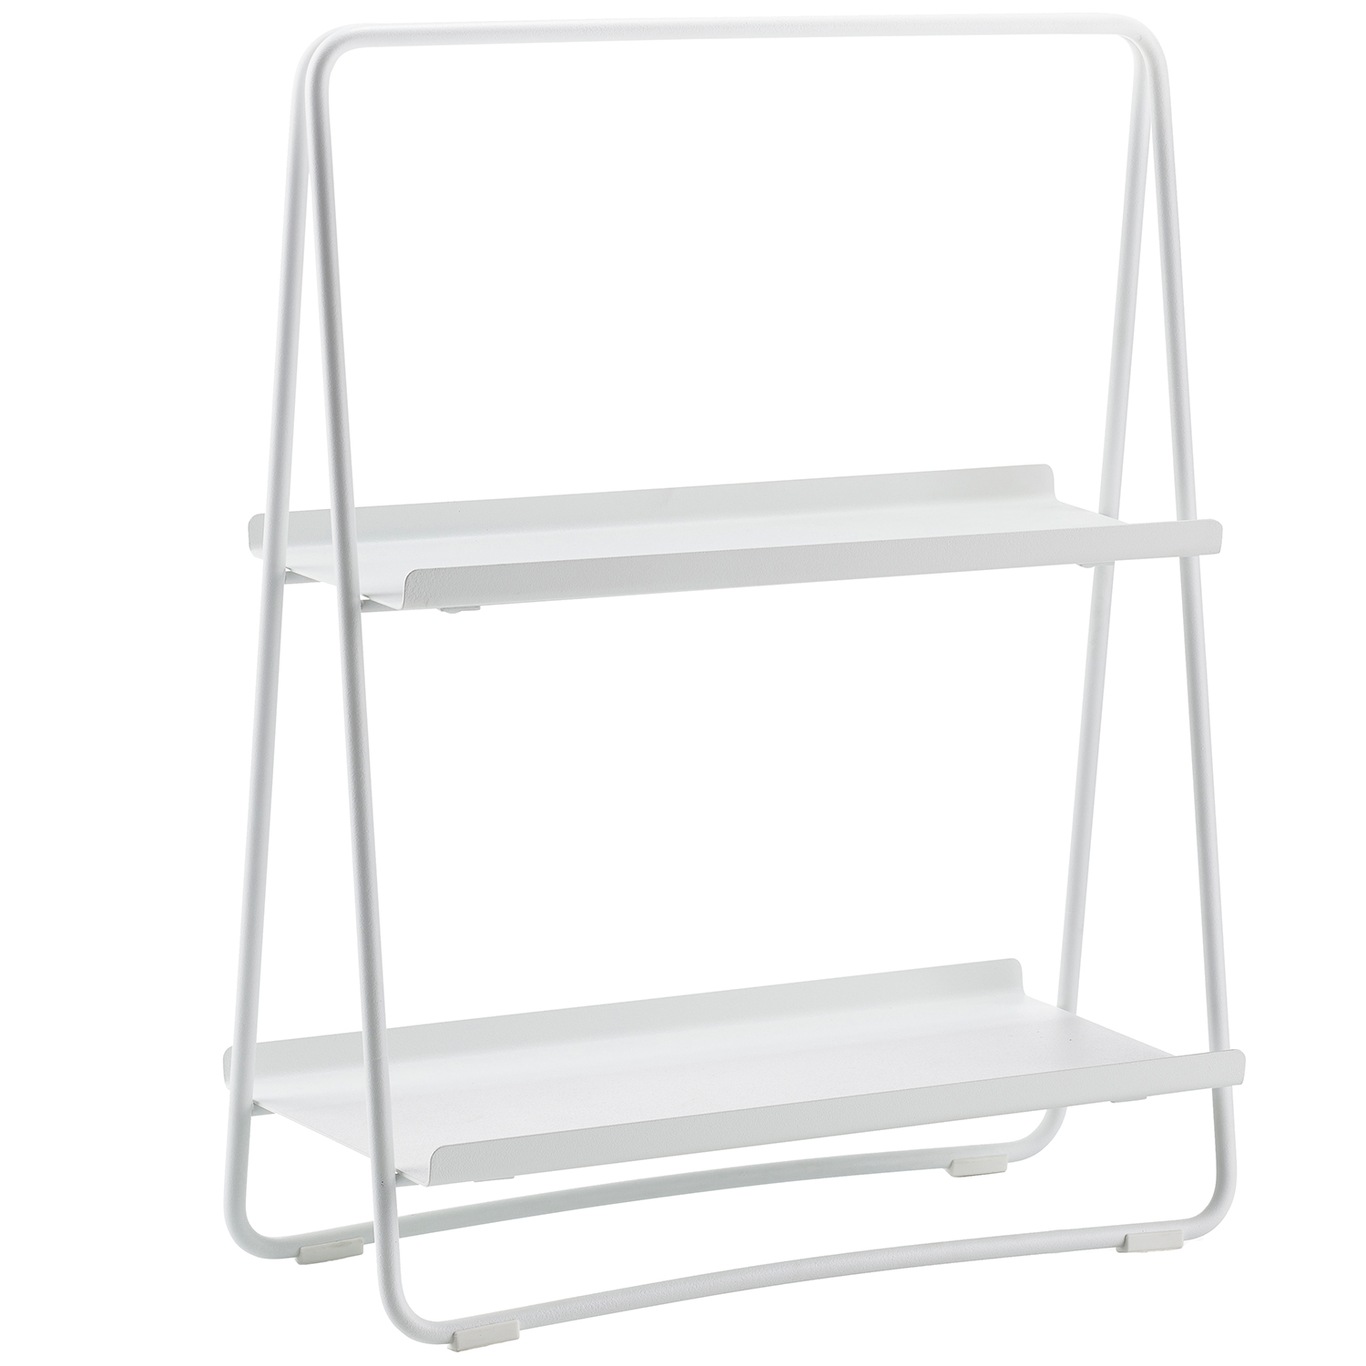 A-Table Shelf 58 cm, White